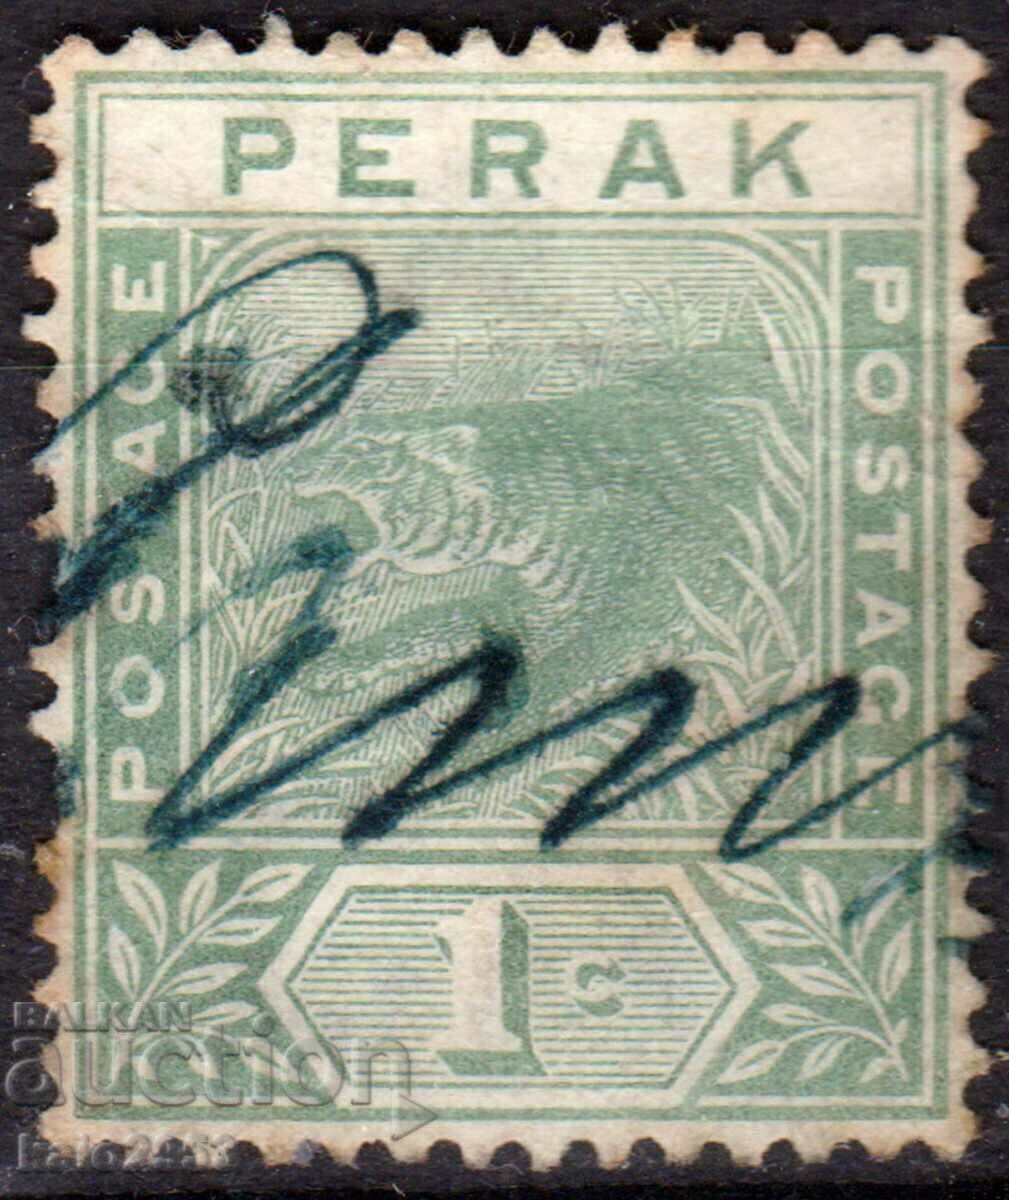 GB/Malaya/Perak-1892-classic stamp-tiger leap, ink